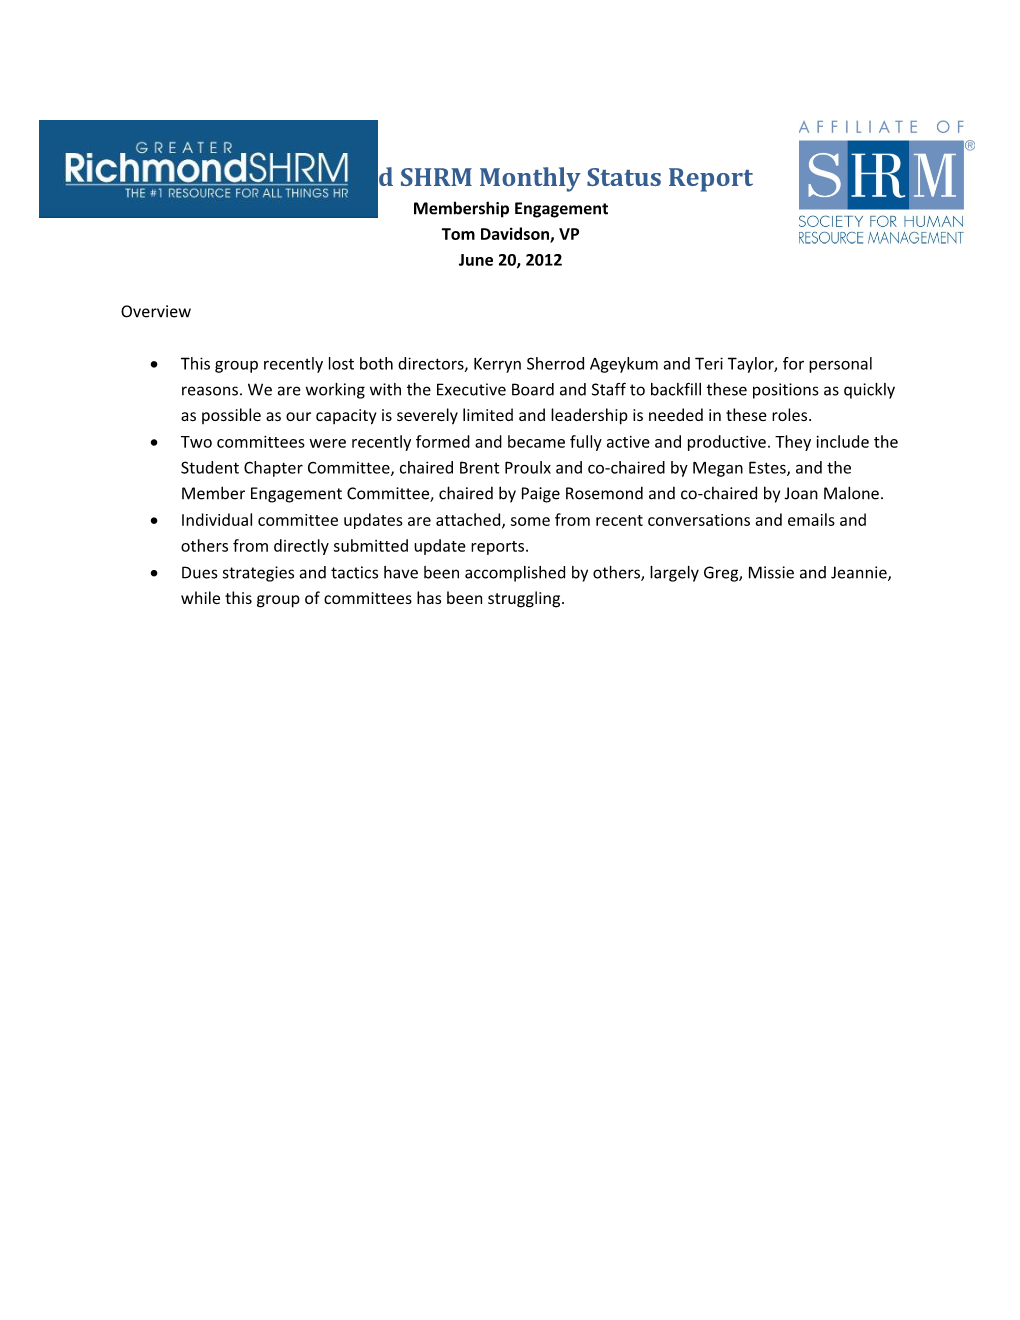 Richmond SHRM Monthly Status Report